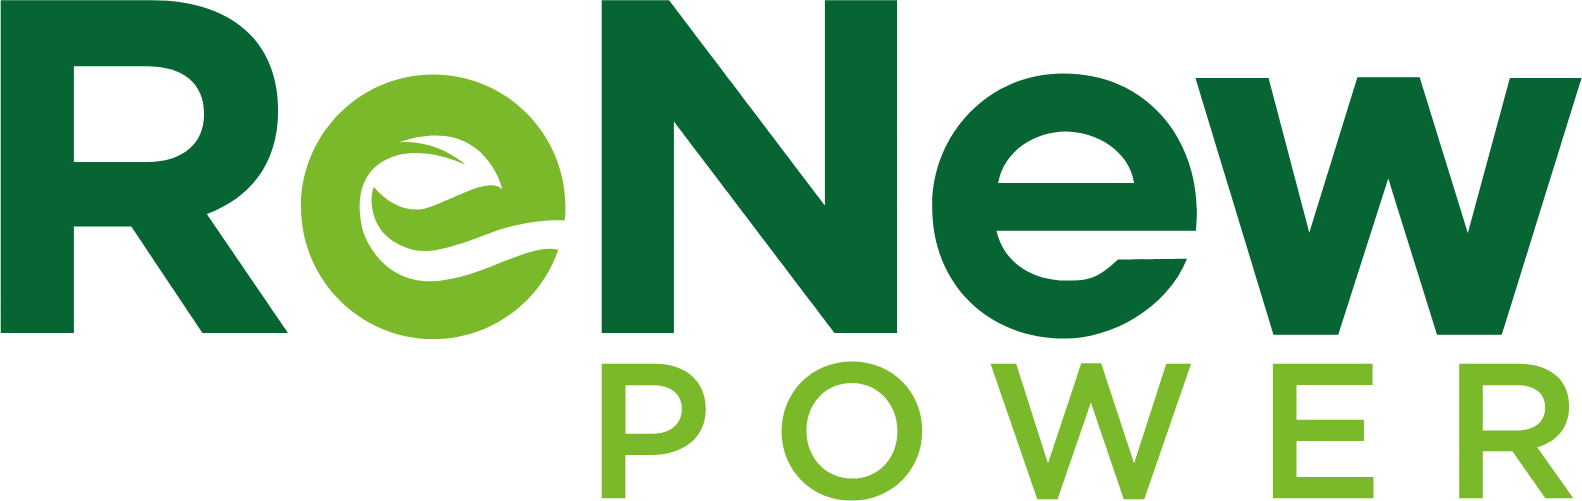 ReNew Power logo large (transparent PNG)